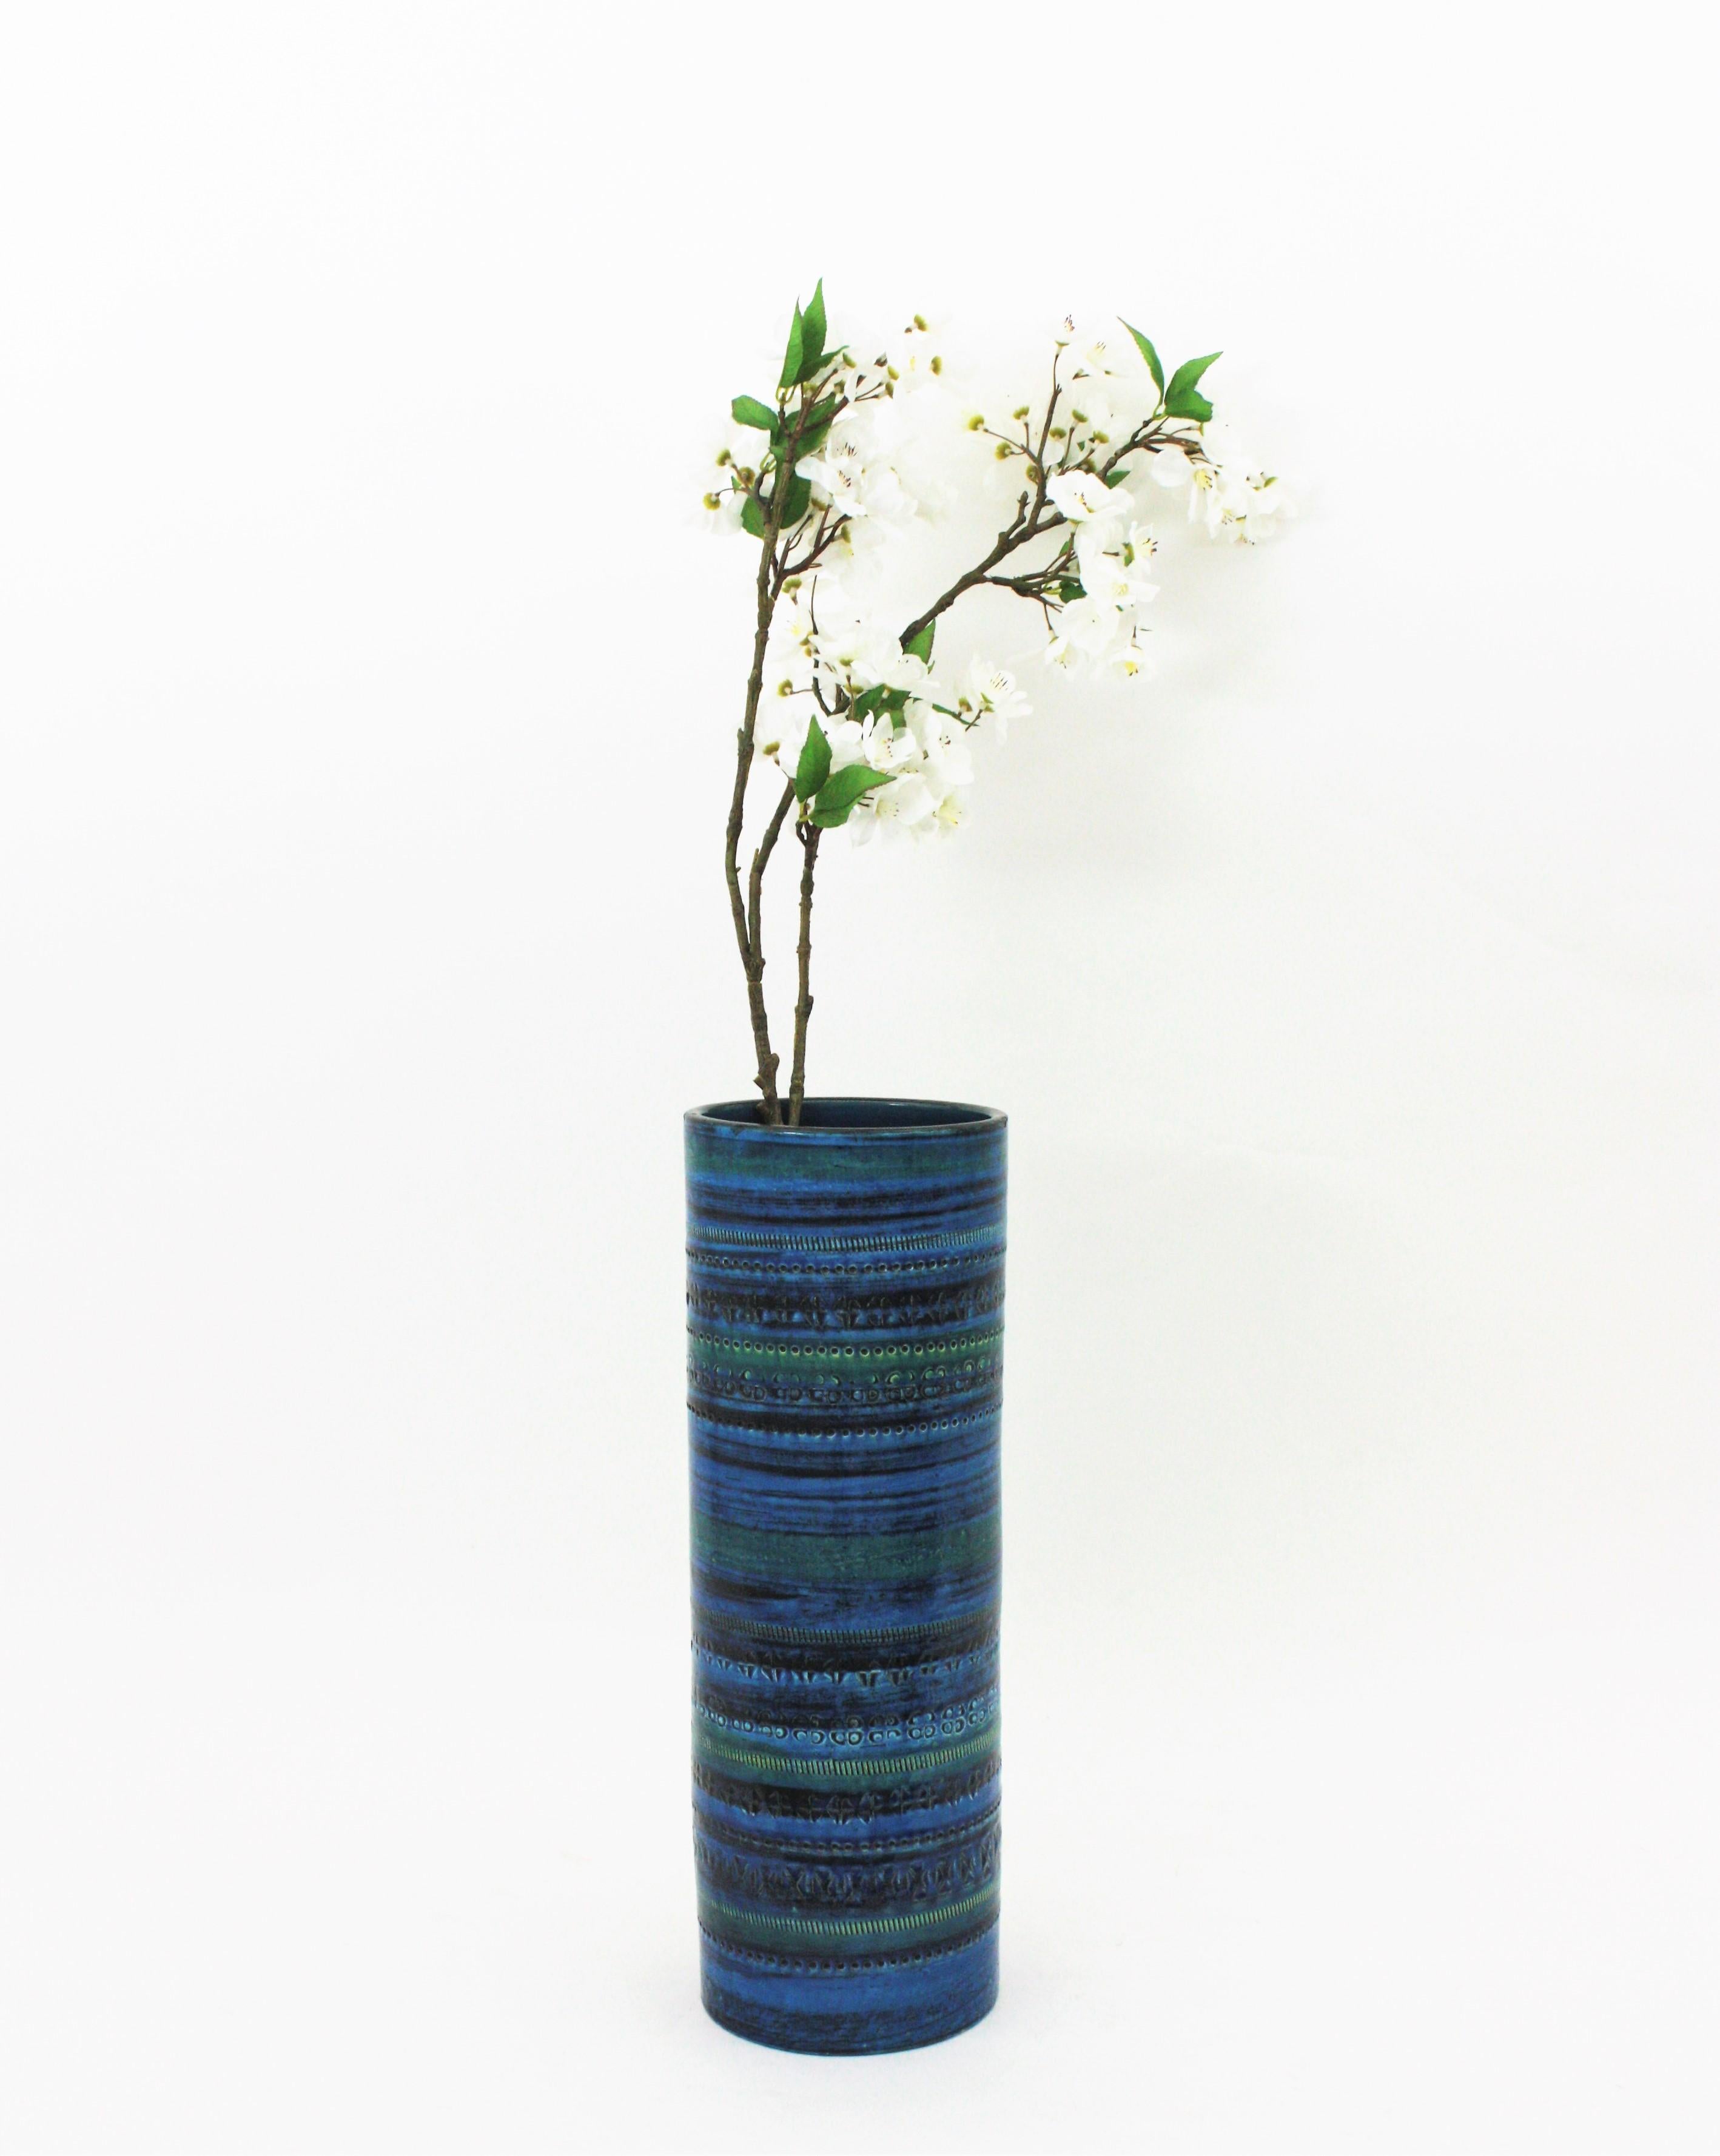 Hand-Painted Aldo Londi Bitossi Rimini Blue Glazed Ceramic XL Vase, Italy, 1960s For Sale